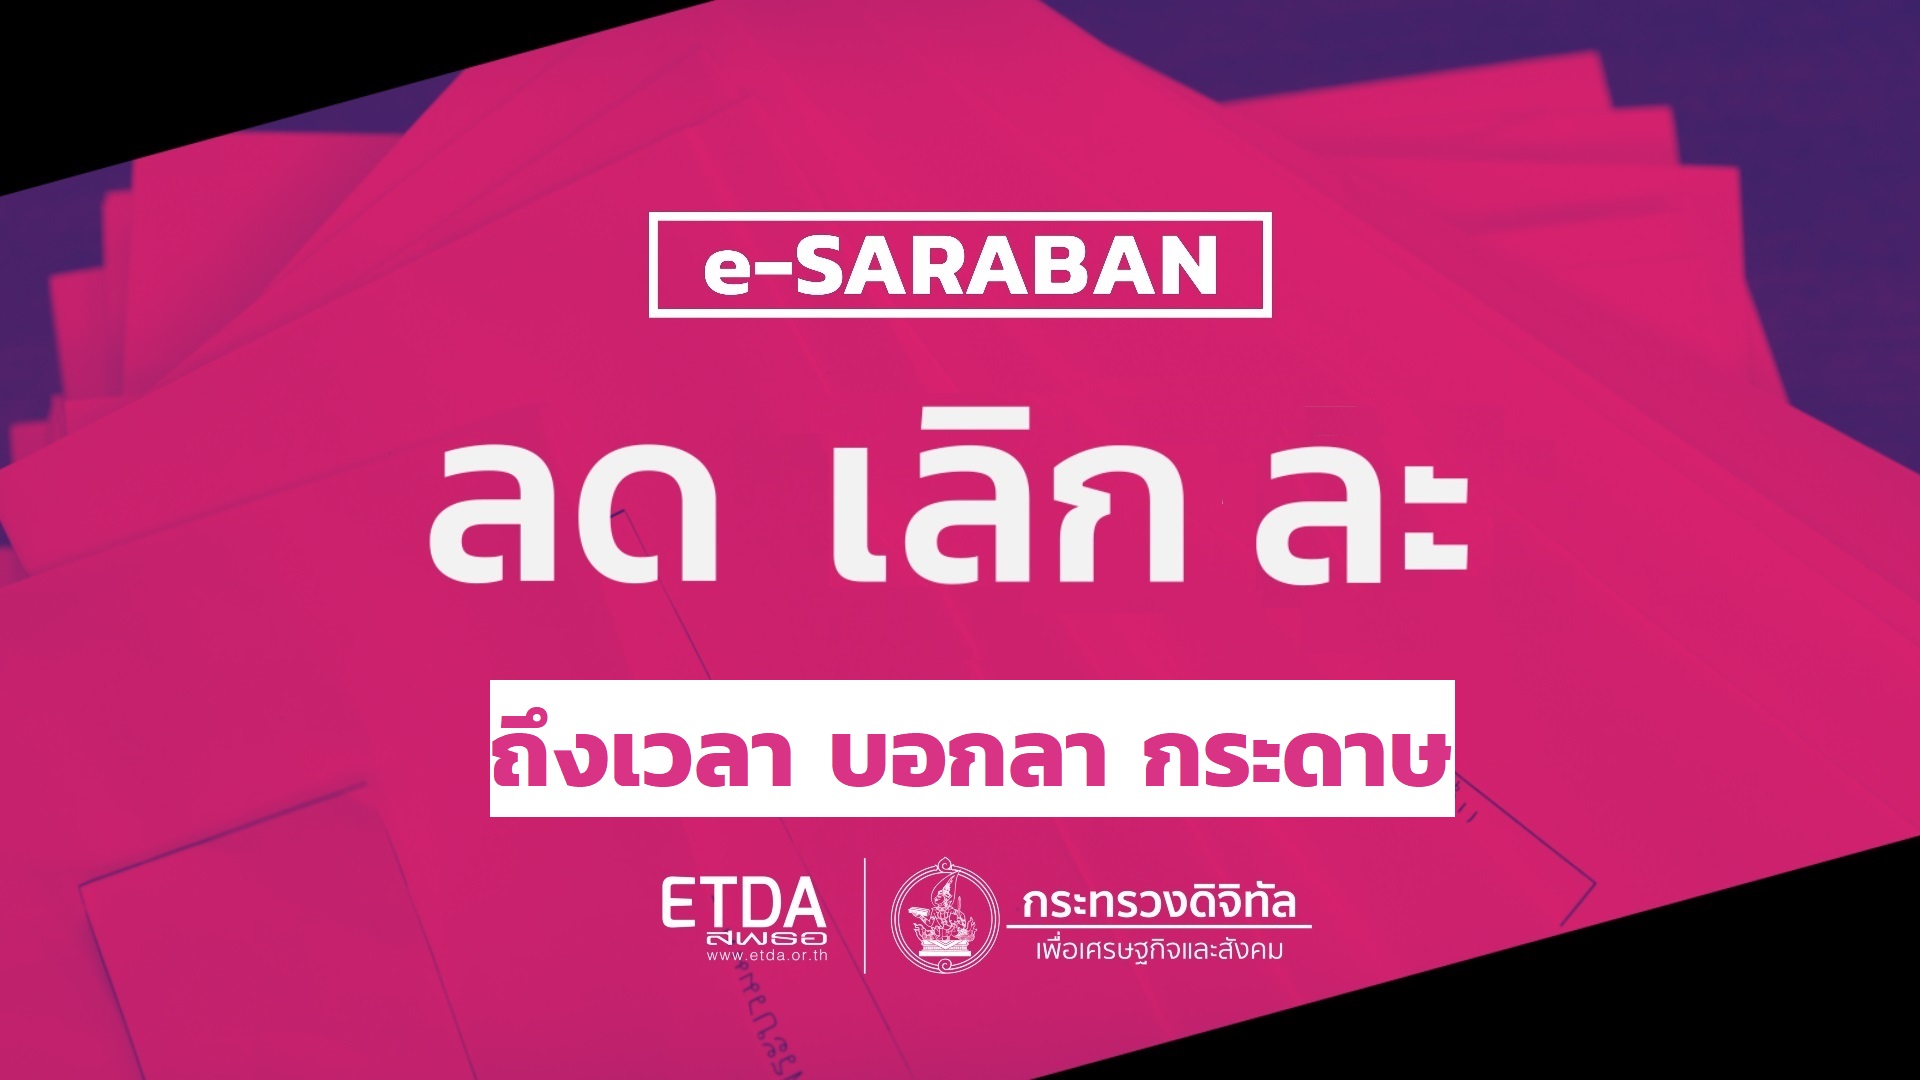 e-Saraban : ลด เลิก ละ ถึงเวลา บอกลา กระดาษ